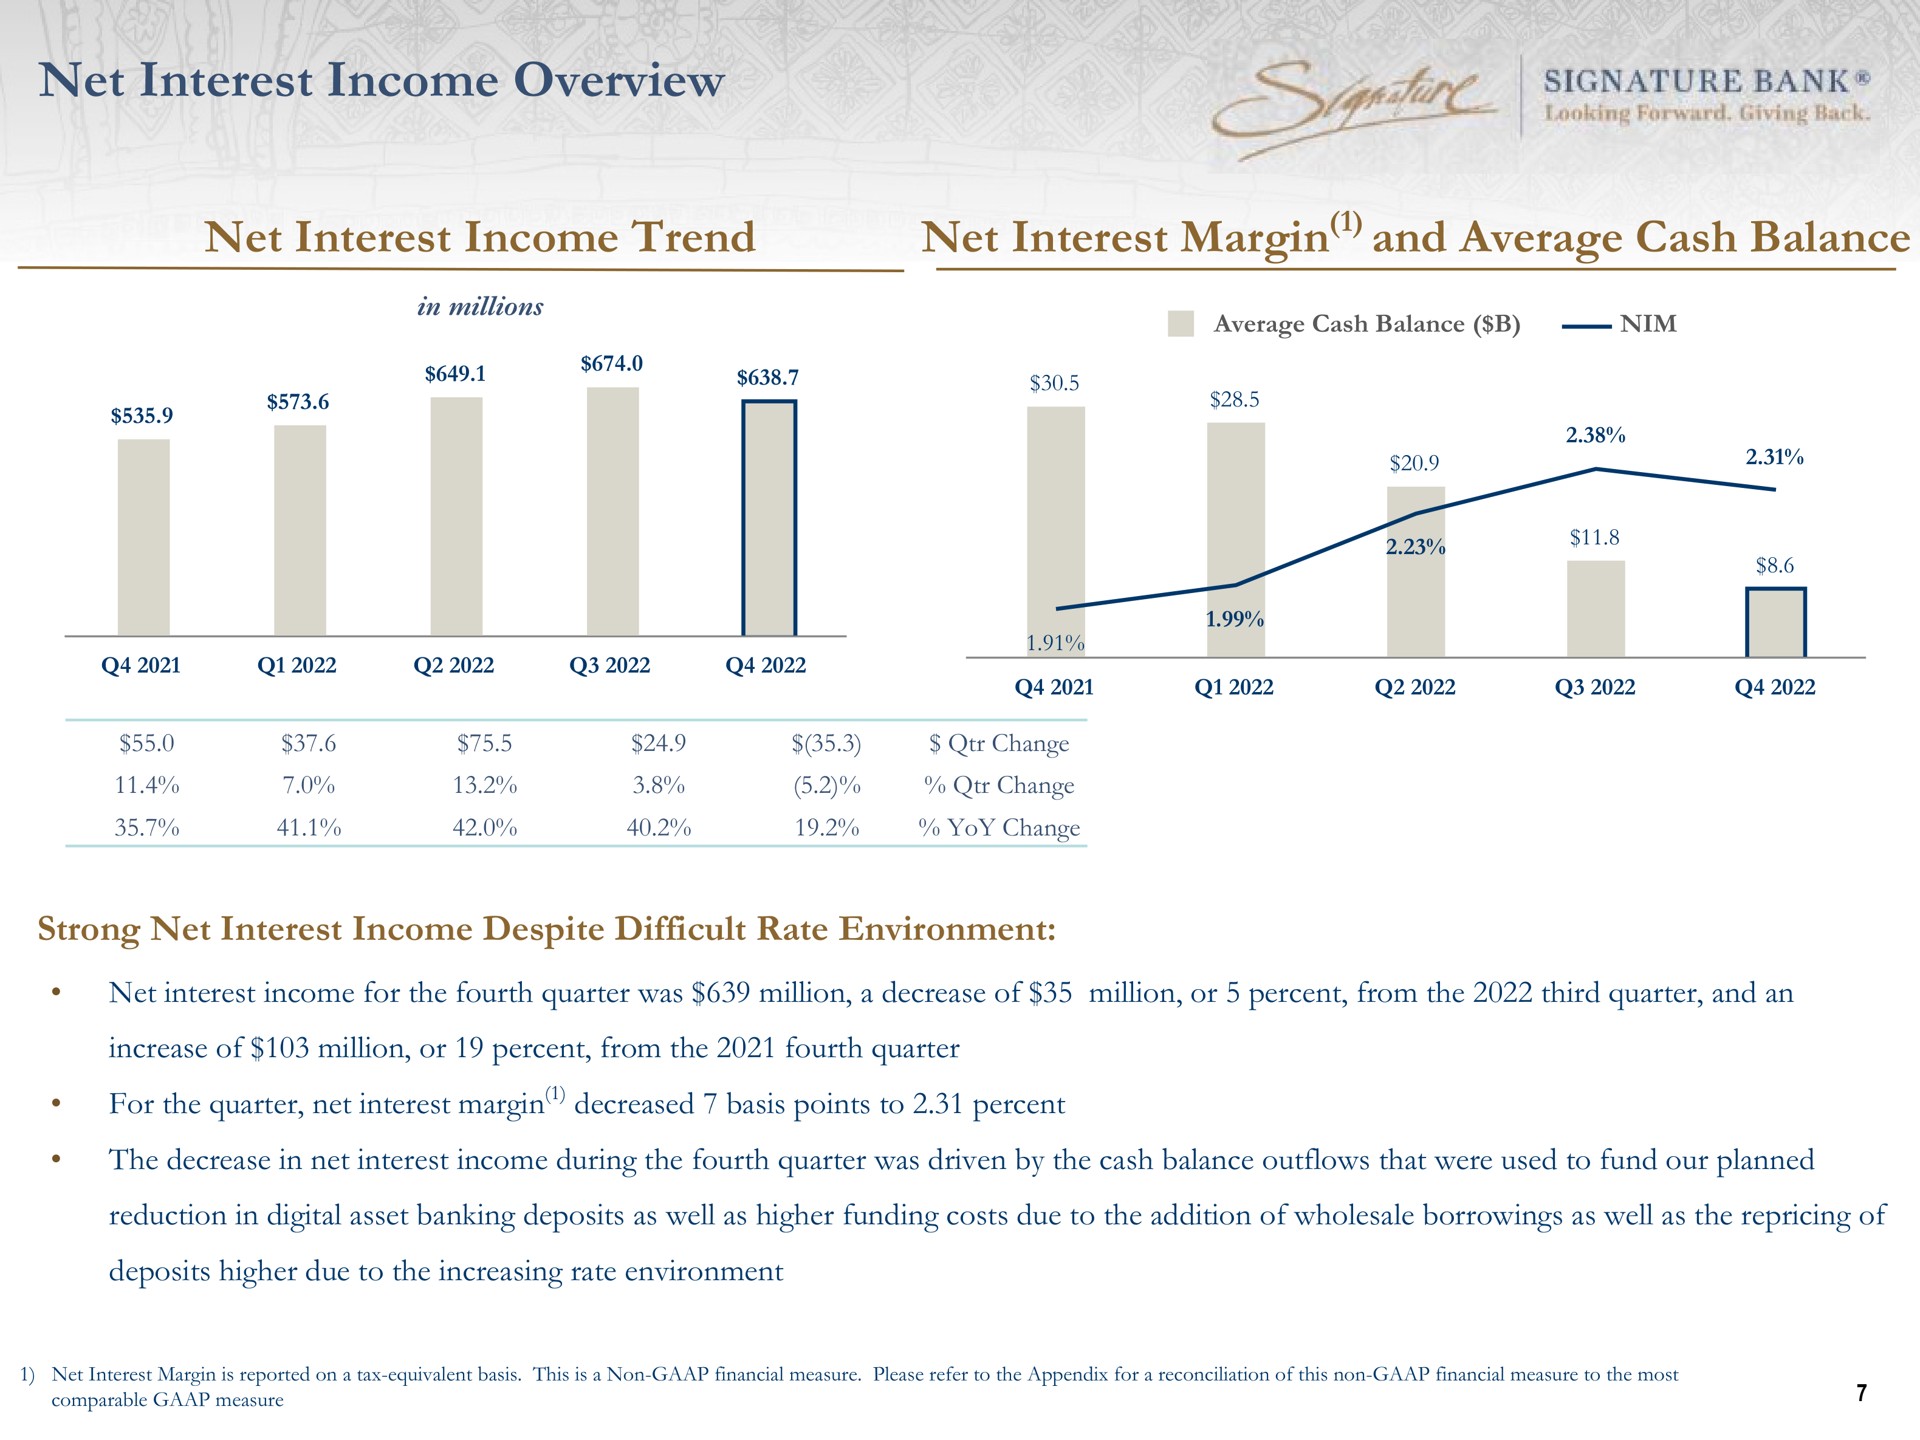 net interest income overview net interest income trend net interest margin and average cash balance signature bank | Signature Bank